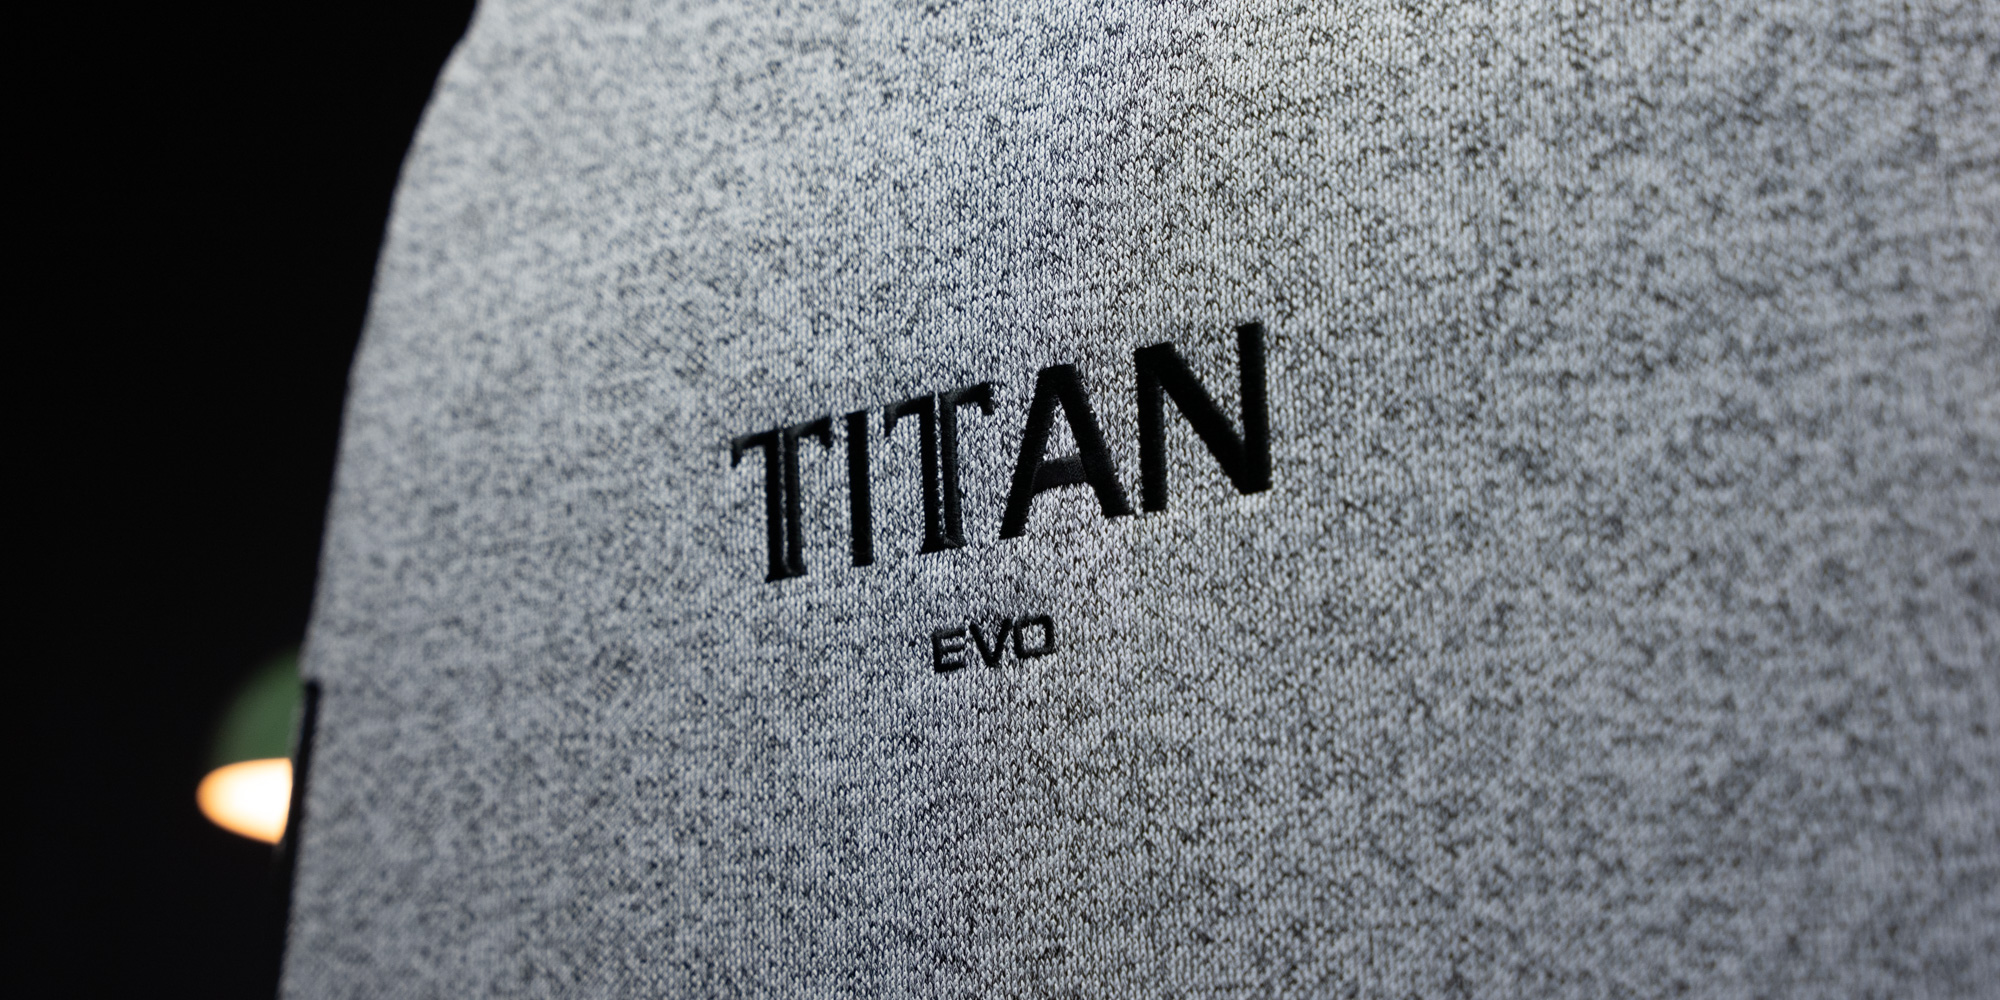  Secretlab Titan Evo 2022 review: Numerous updates make this gaming chair my favorite so far [Video]